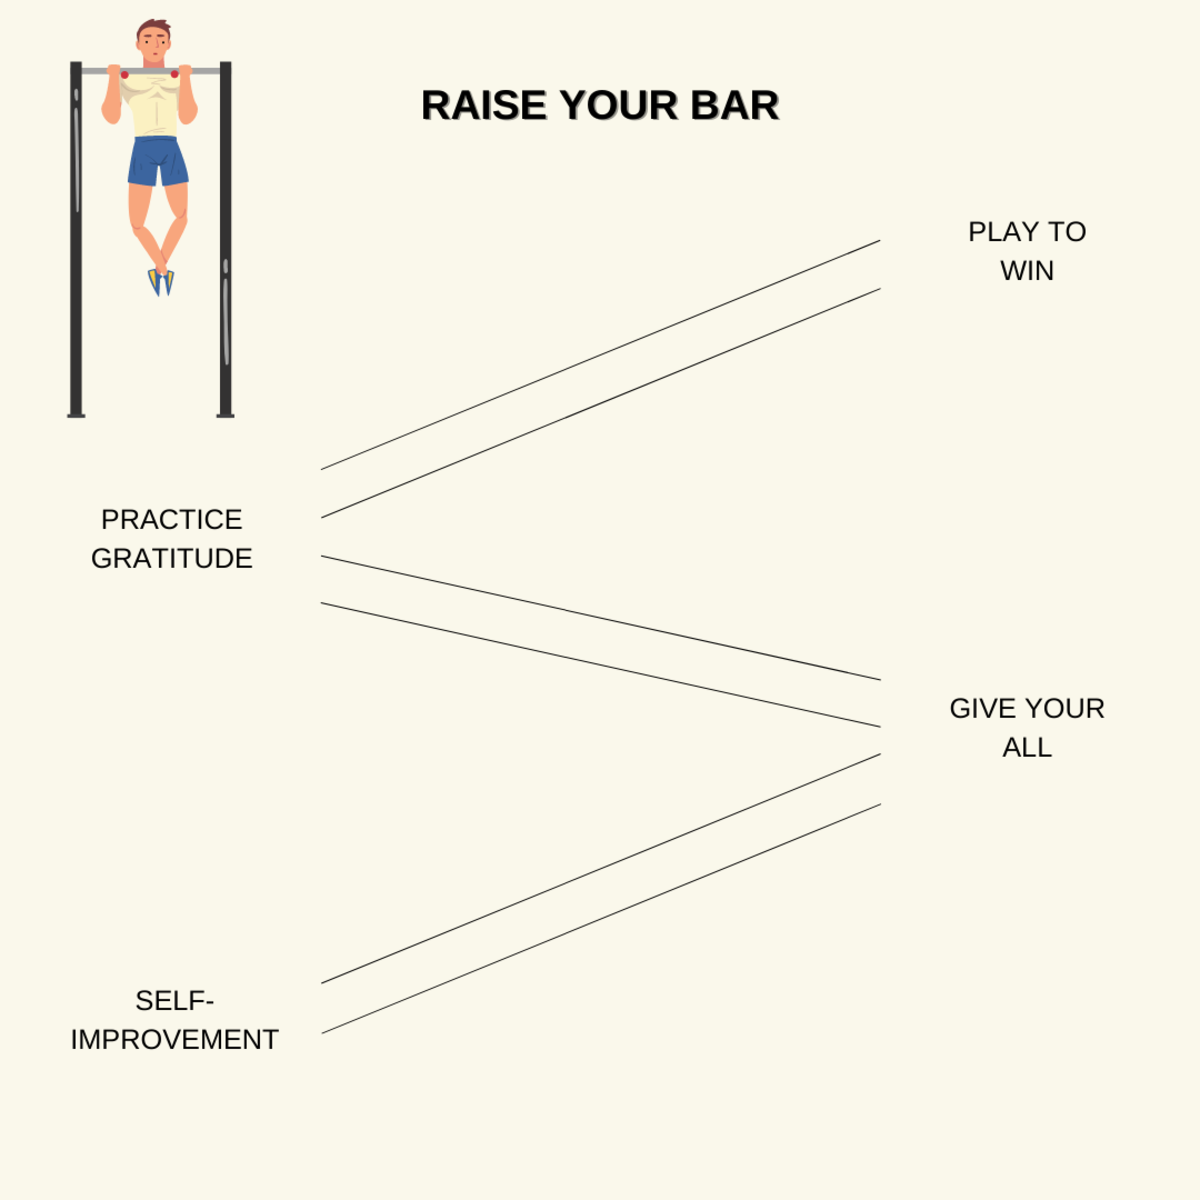 "Raise Your Bar" by Owen Bryan Jr